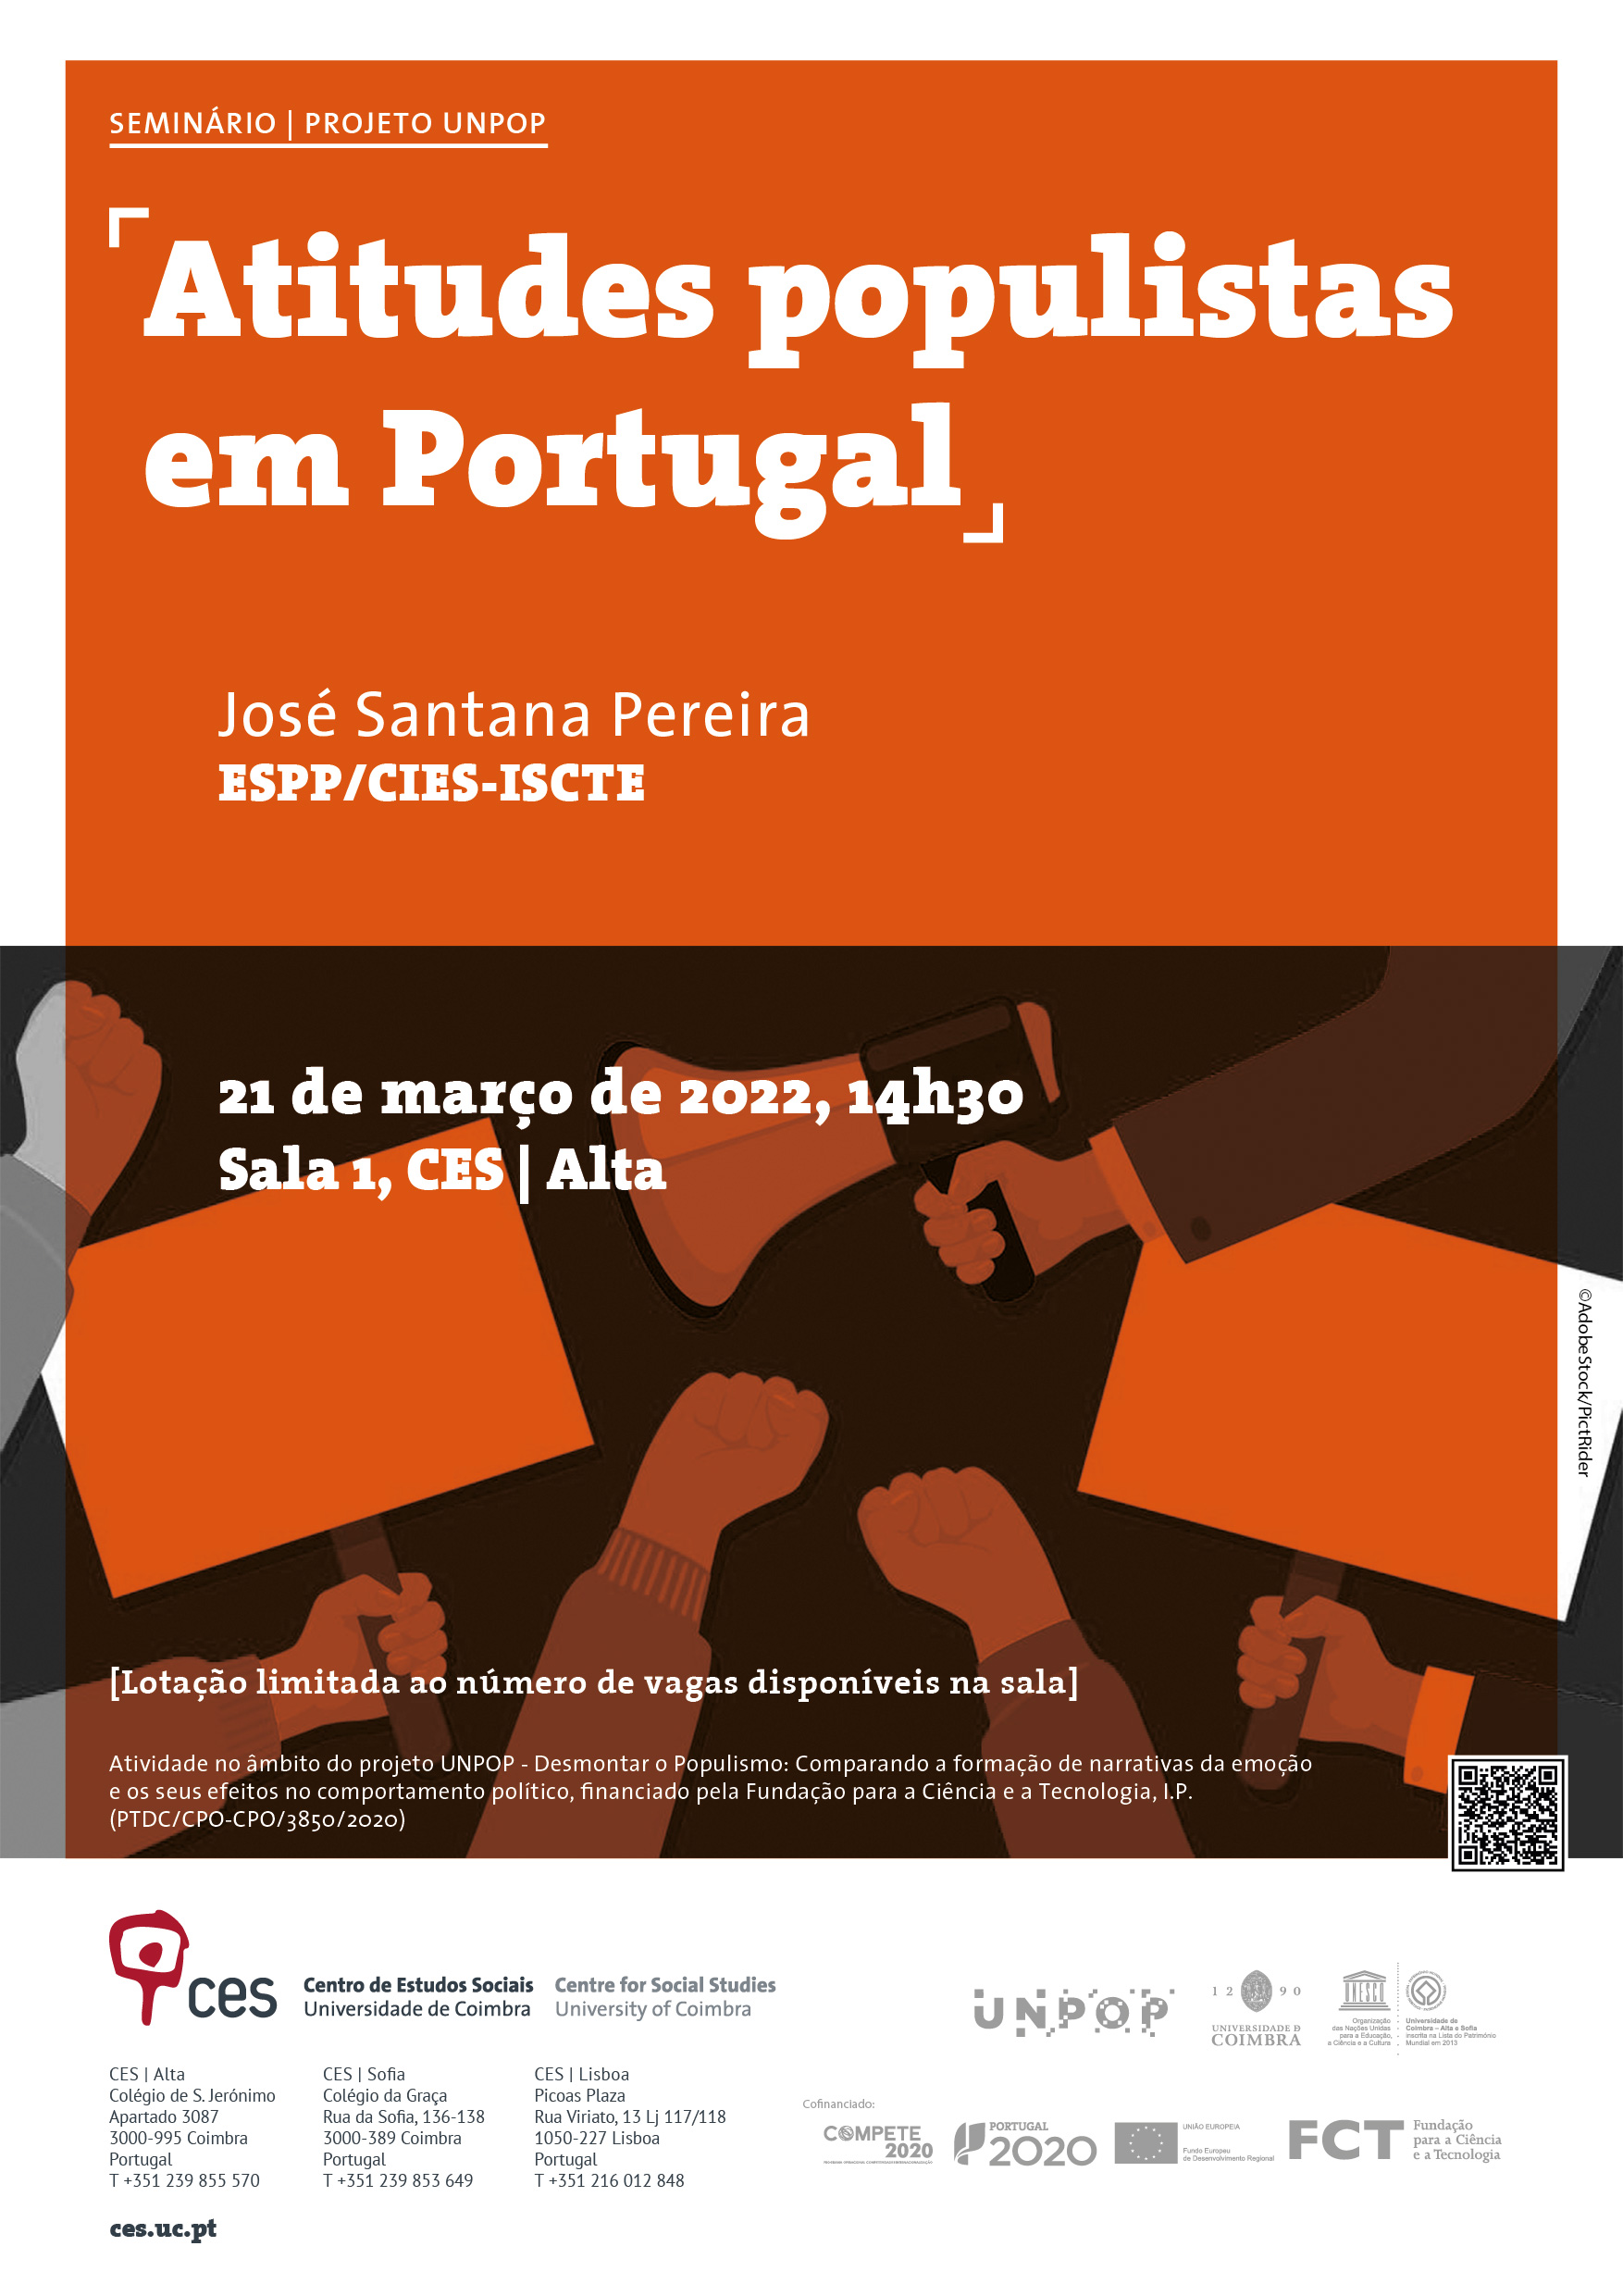 Populist attitudes in Portugal<span id="edit_36325"><script>$(function() { $('#edit_36325').load( "/myces/user/editobj.php?tipo=evento&id=36325" ); });</script></span>